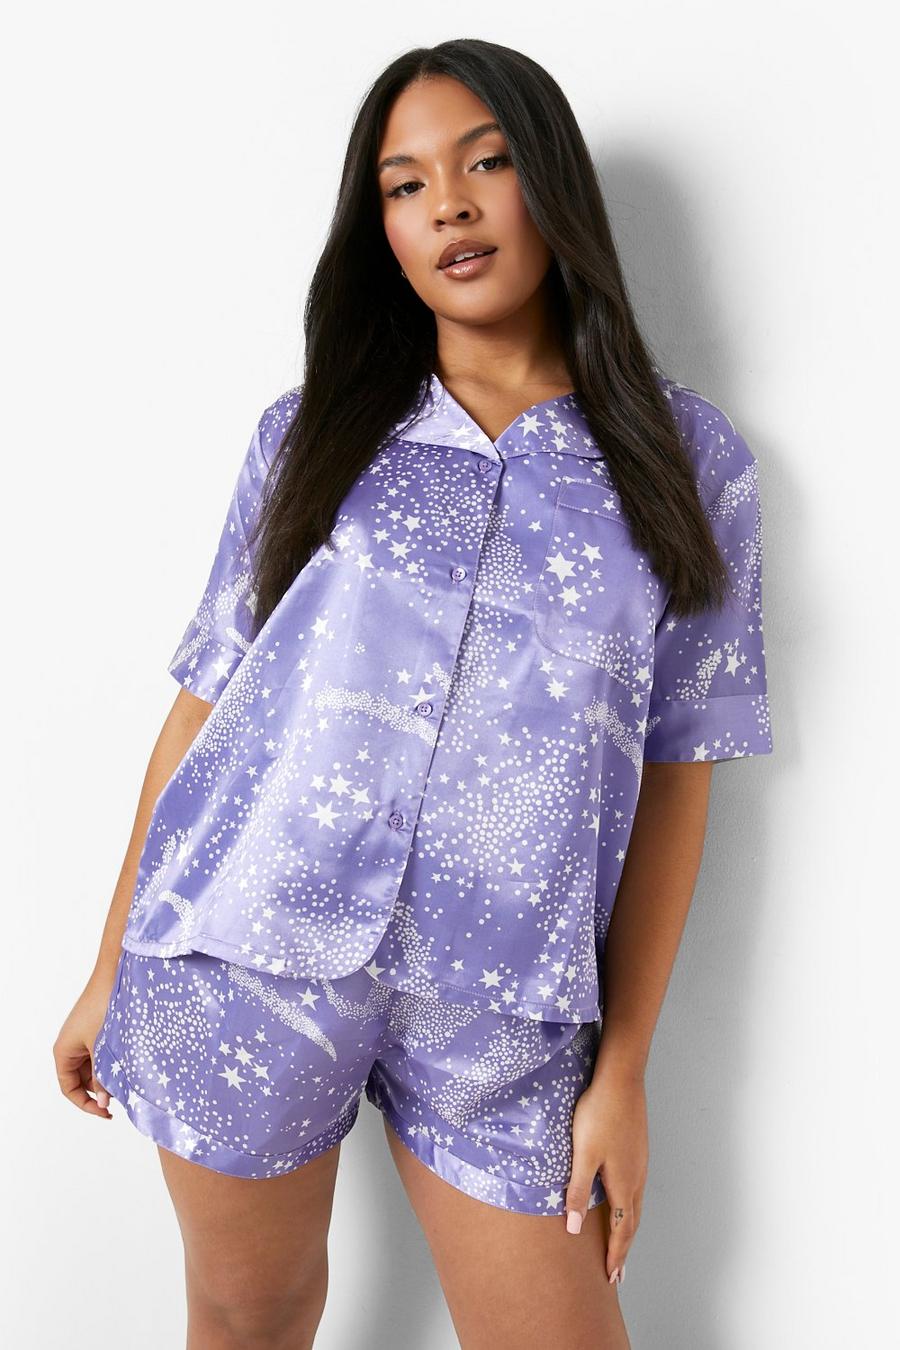 Purple סט פיג'מה חולצה ושורט עם הדפס כוכבים, מידות גדולות